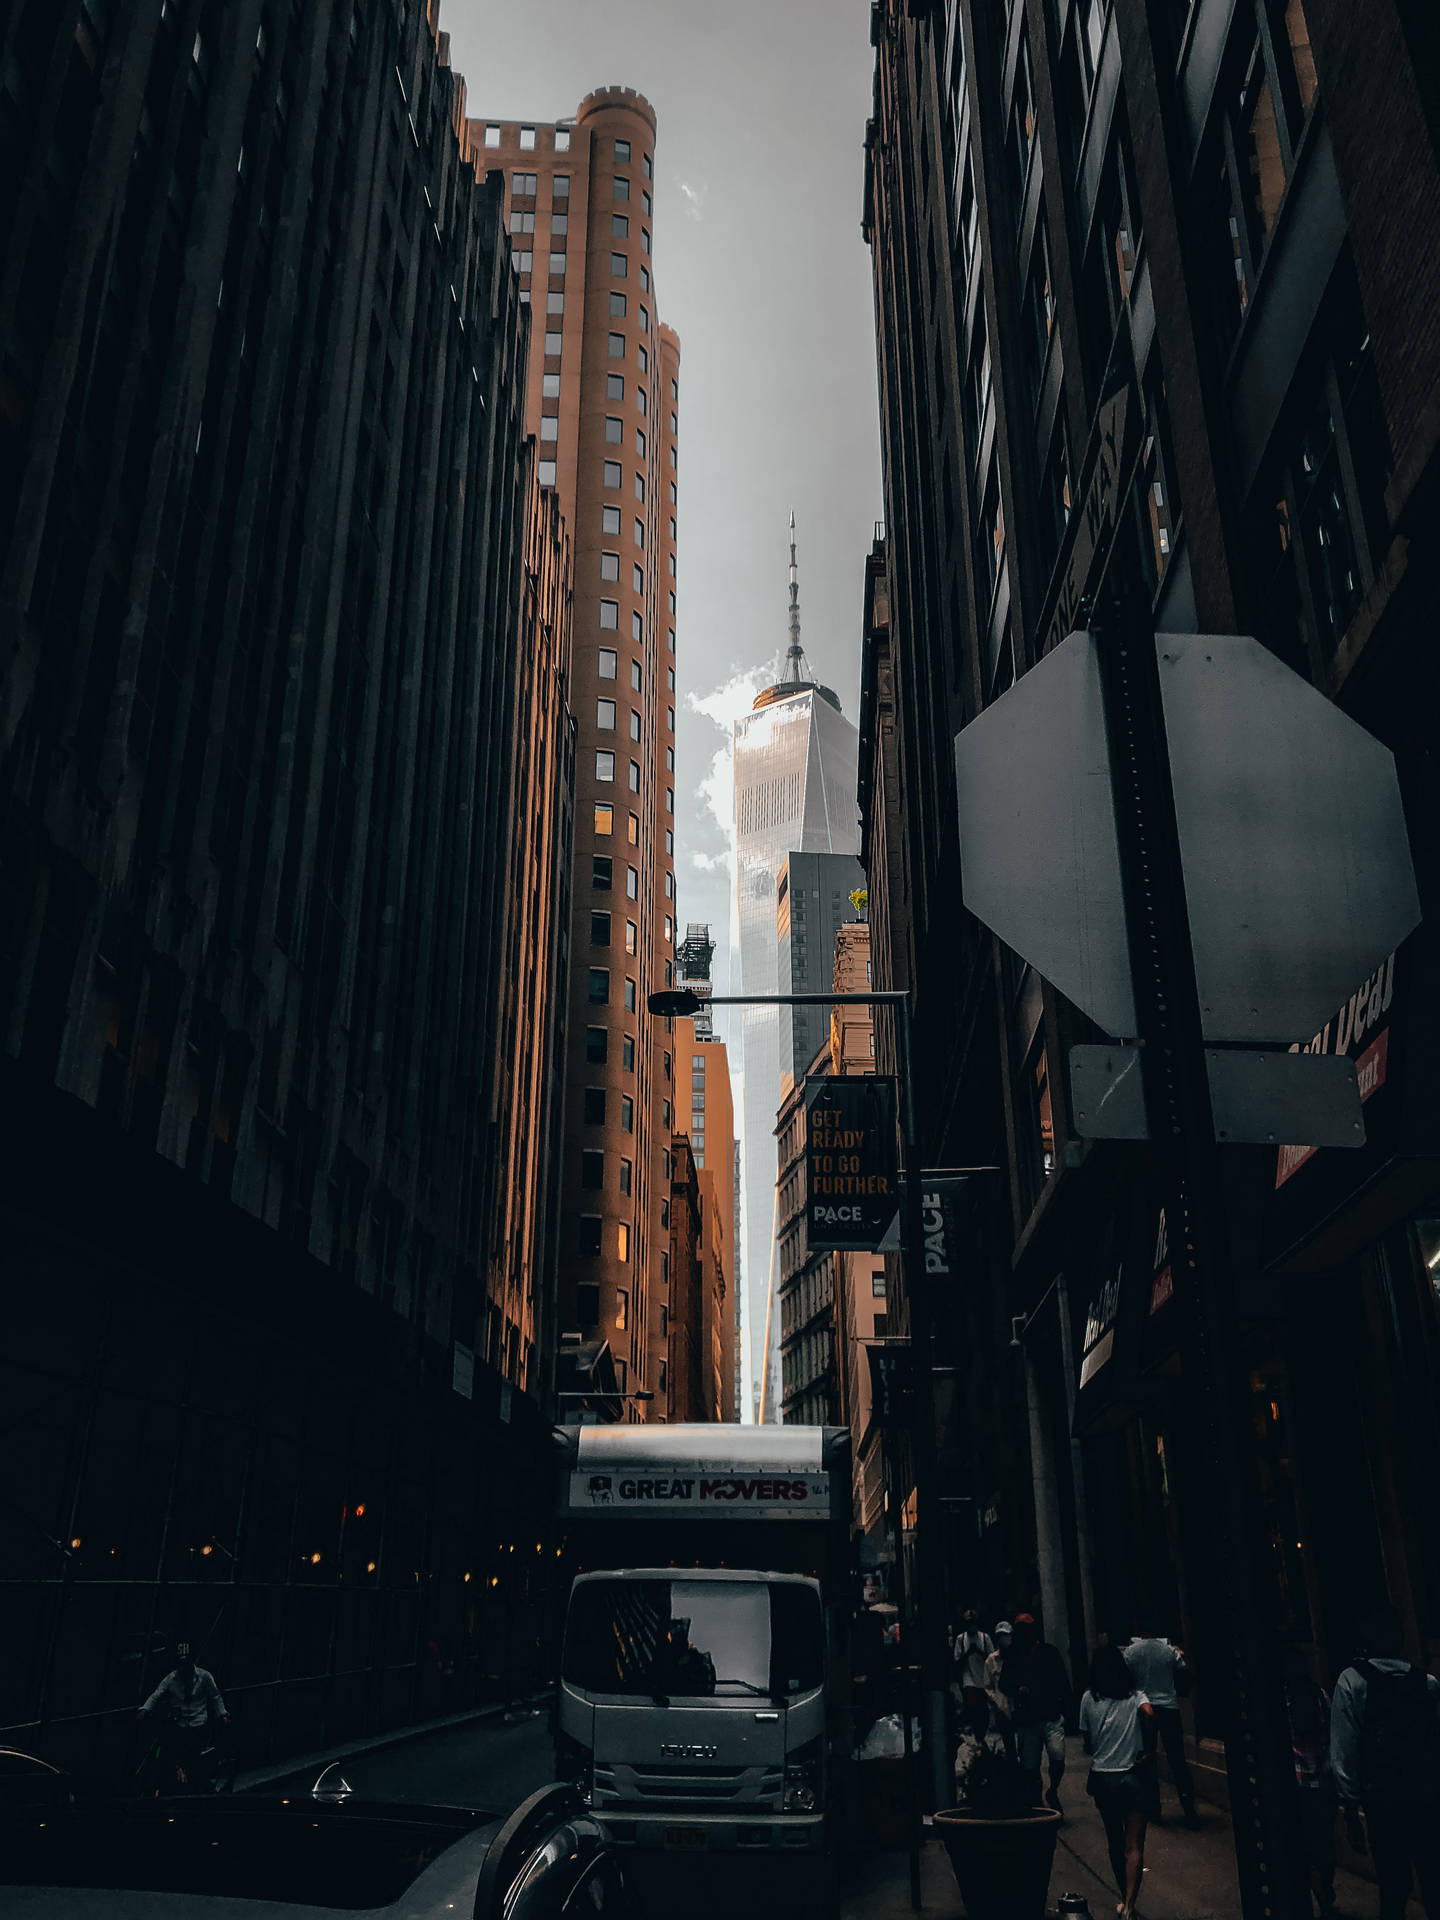 Alley Between Buildings In New York Iphone